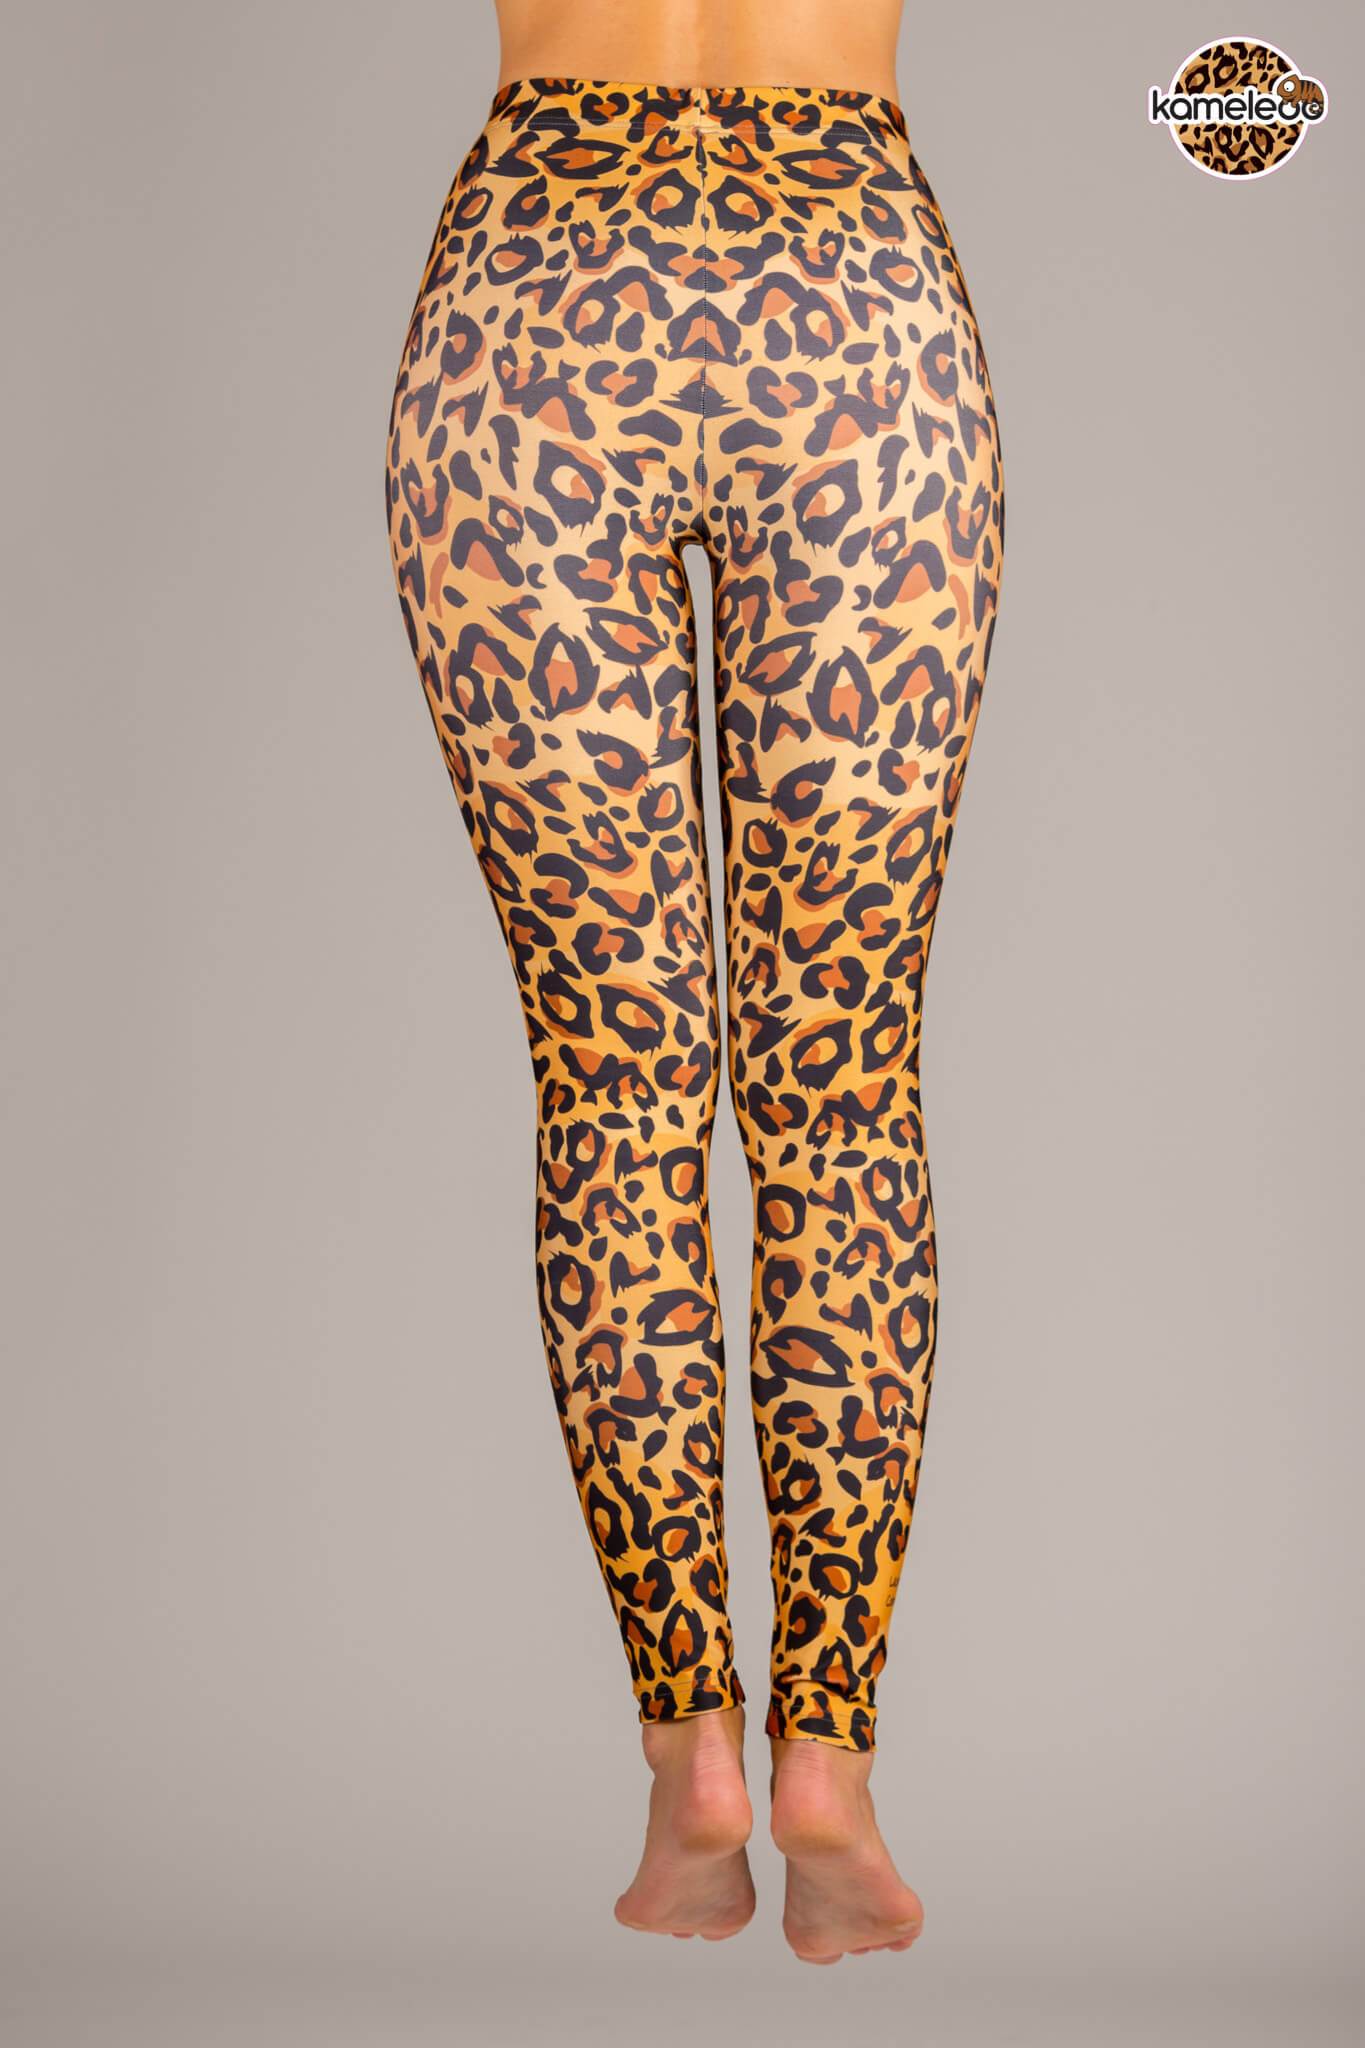 Leopardo Coloridoo Panther Leggings - Natural